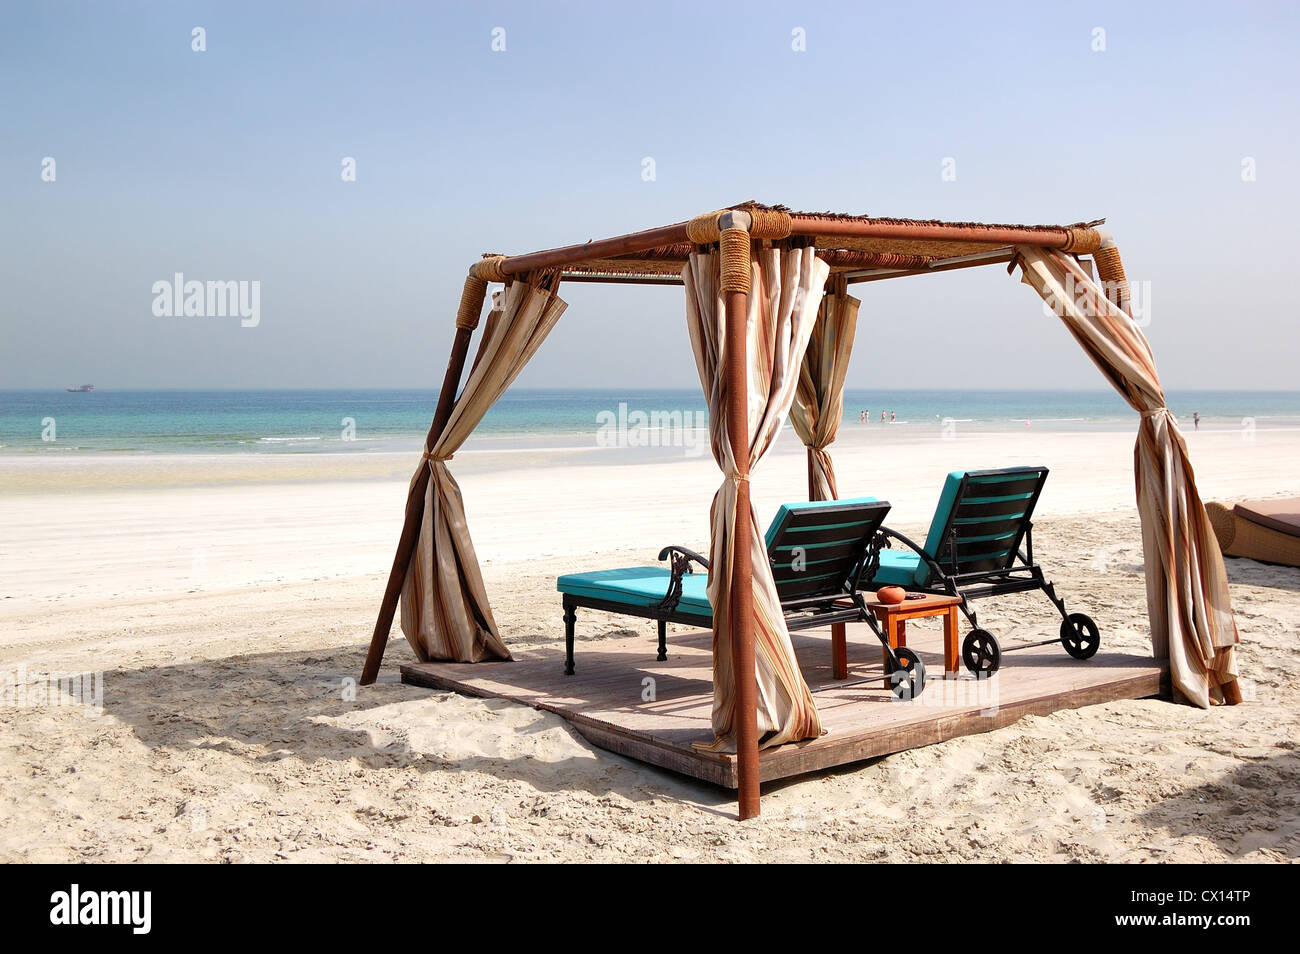 Hut on the beach of luxury hotel, Ajman, UAE Stock Photo